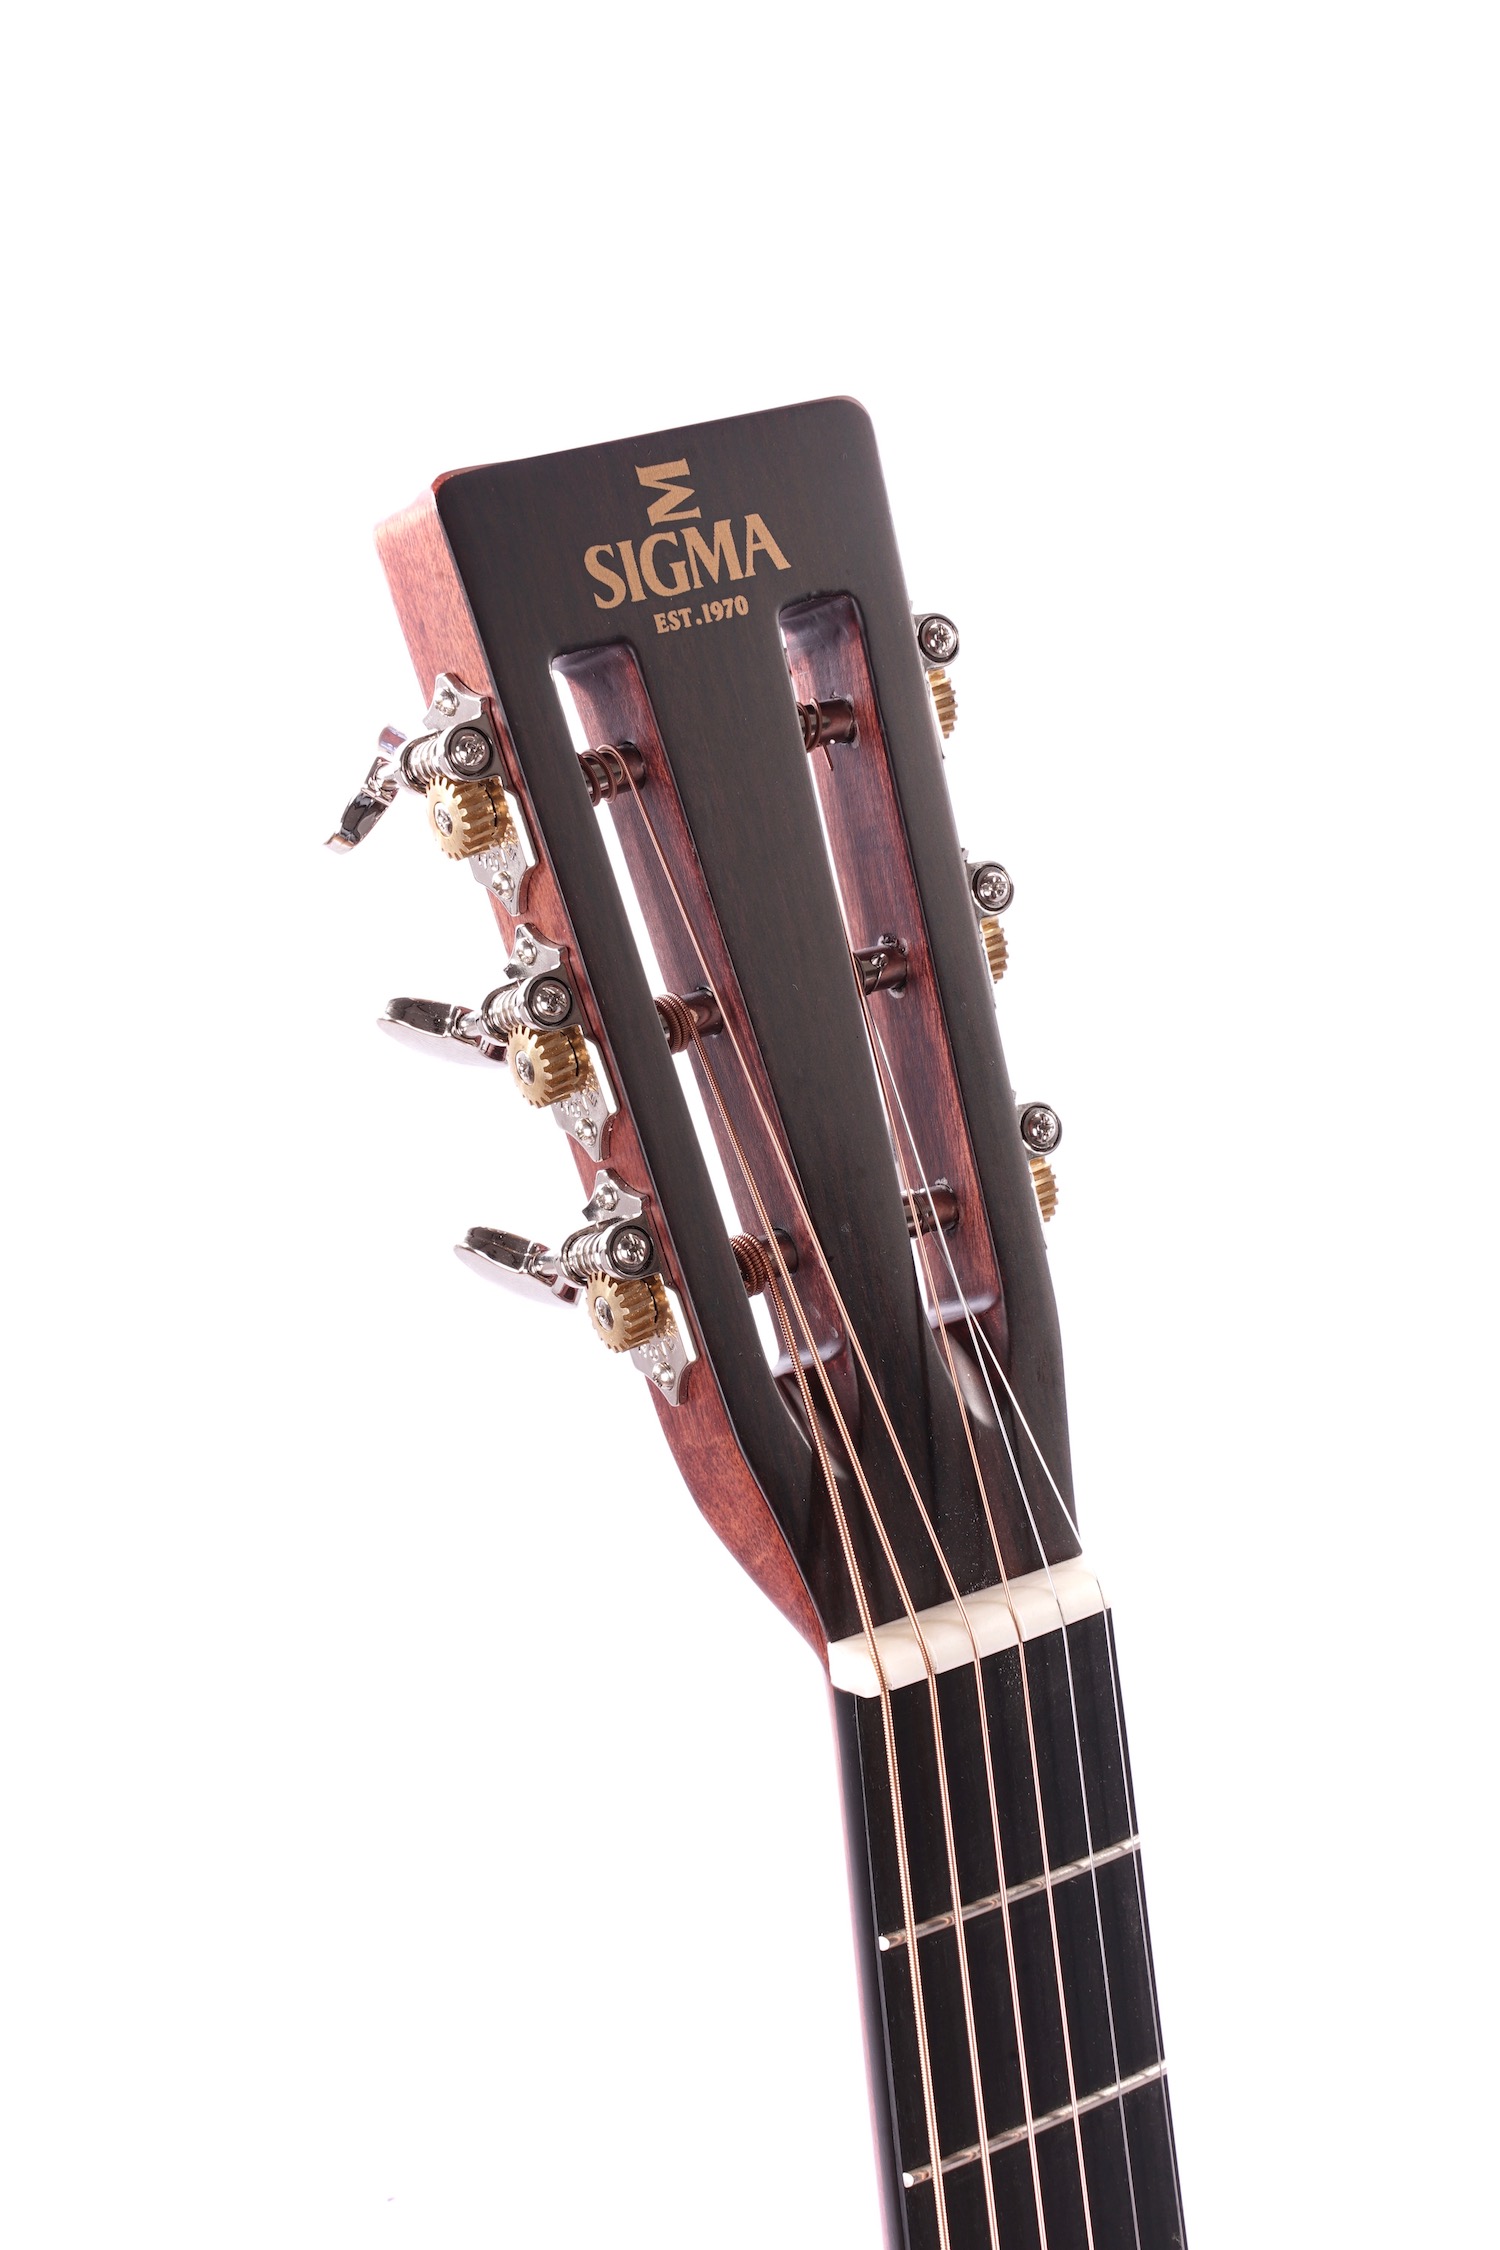 Westerngitarre - Sigma SDR 28S